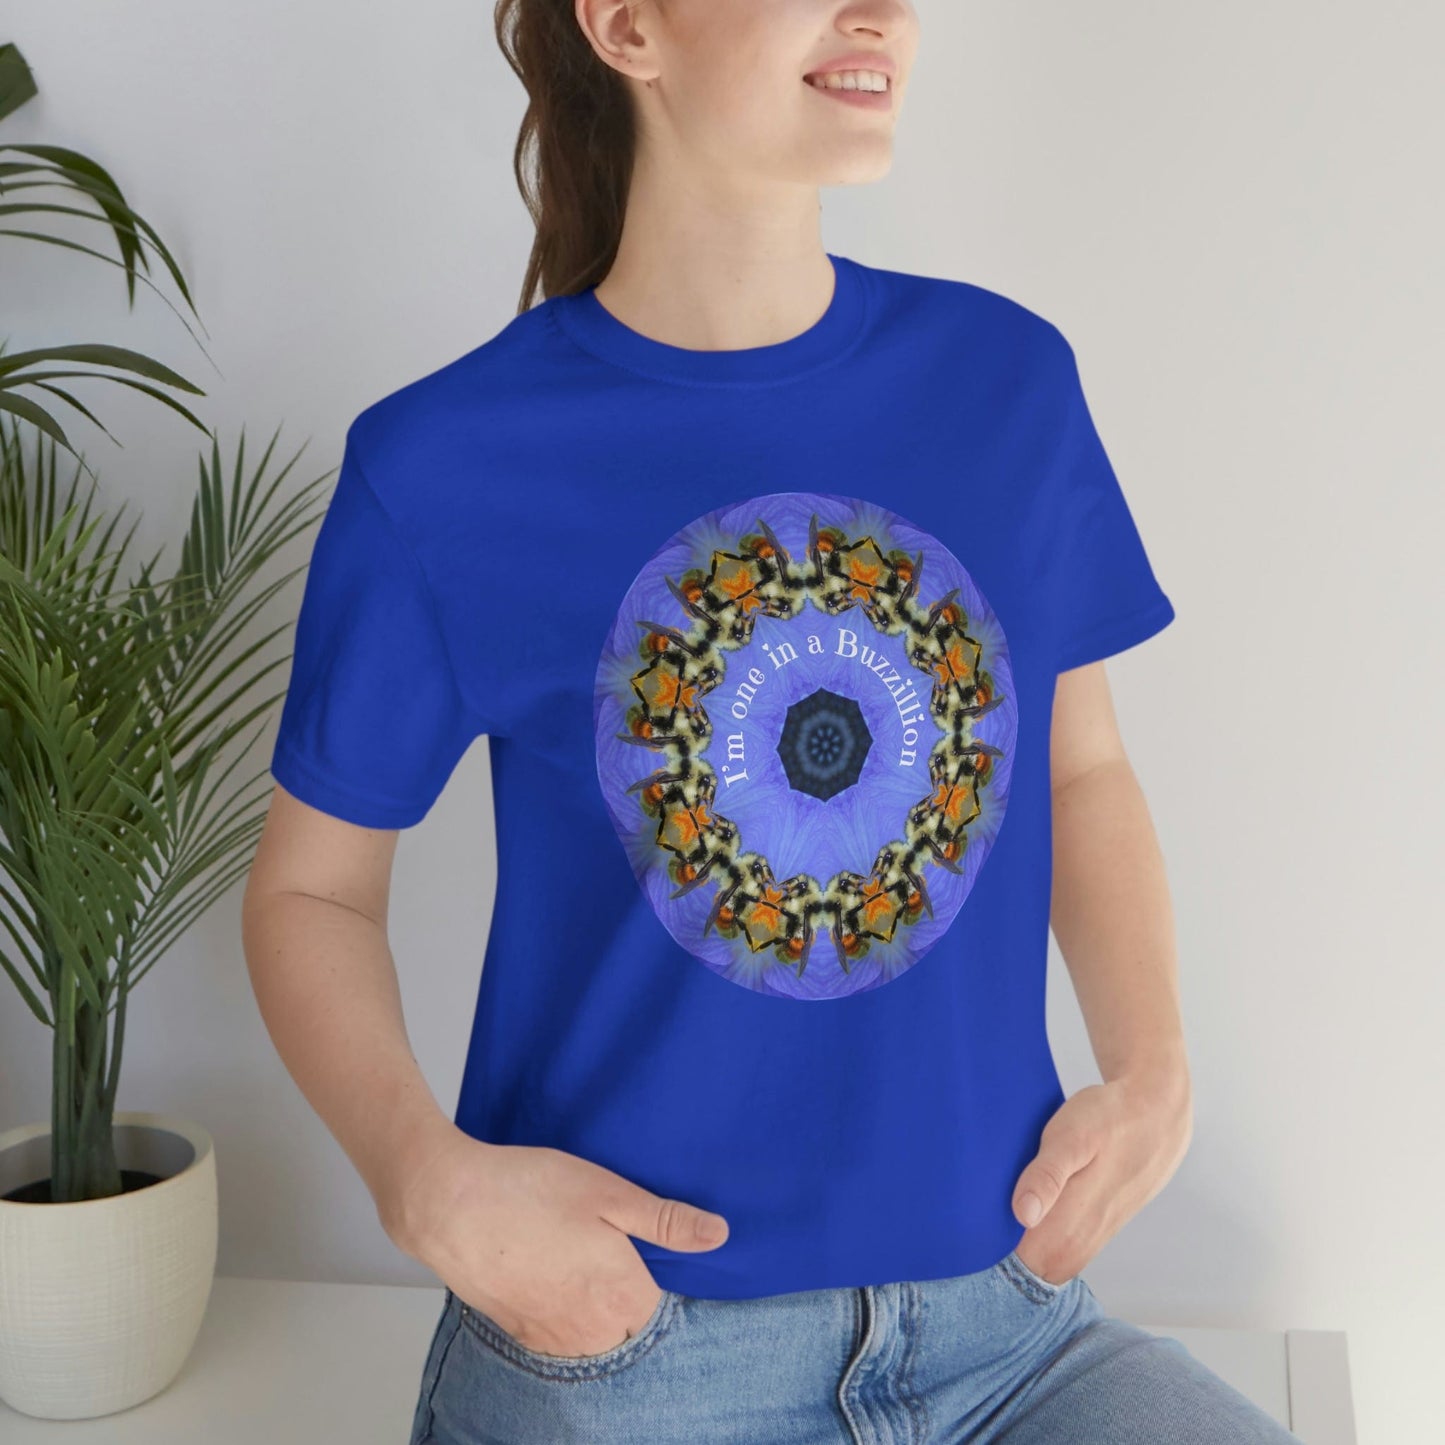 Bee T Shirt, Best Selling Shirts, Poet Shirt, Zen Mystical Cottage Core Insect Shirt, Witty Bug Shirt, Cute Shirts Teens, Mandala T Shirt E